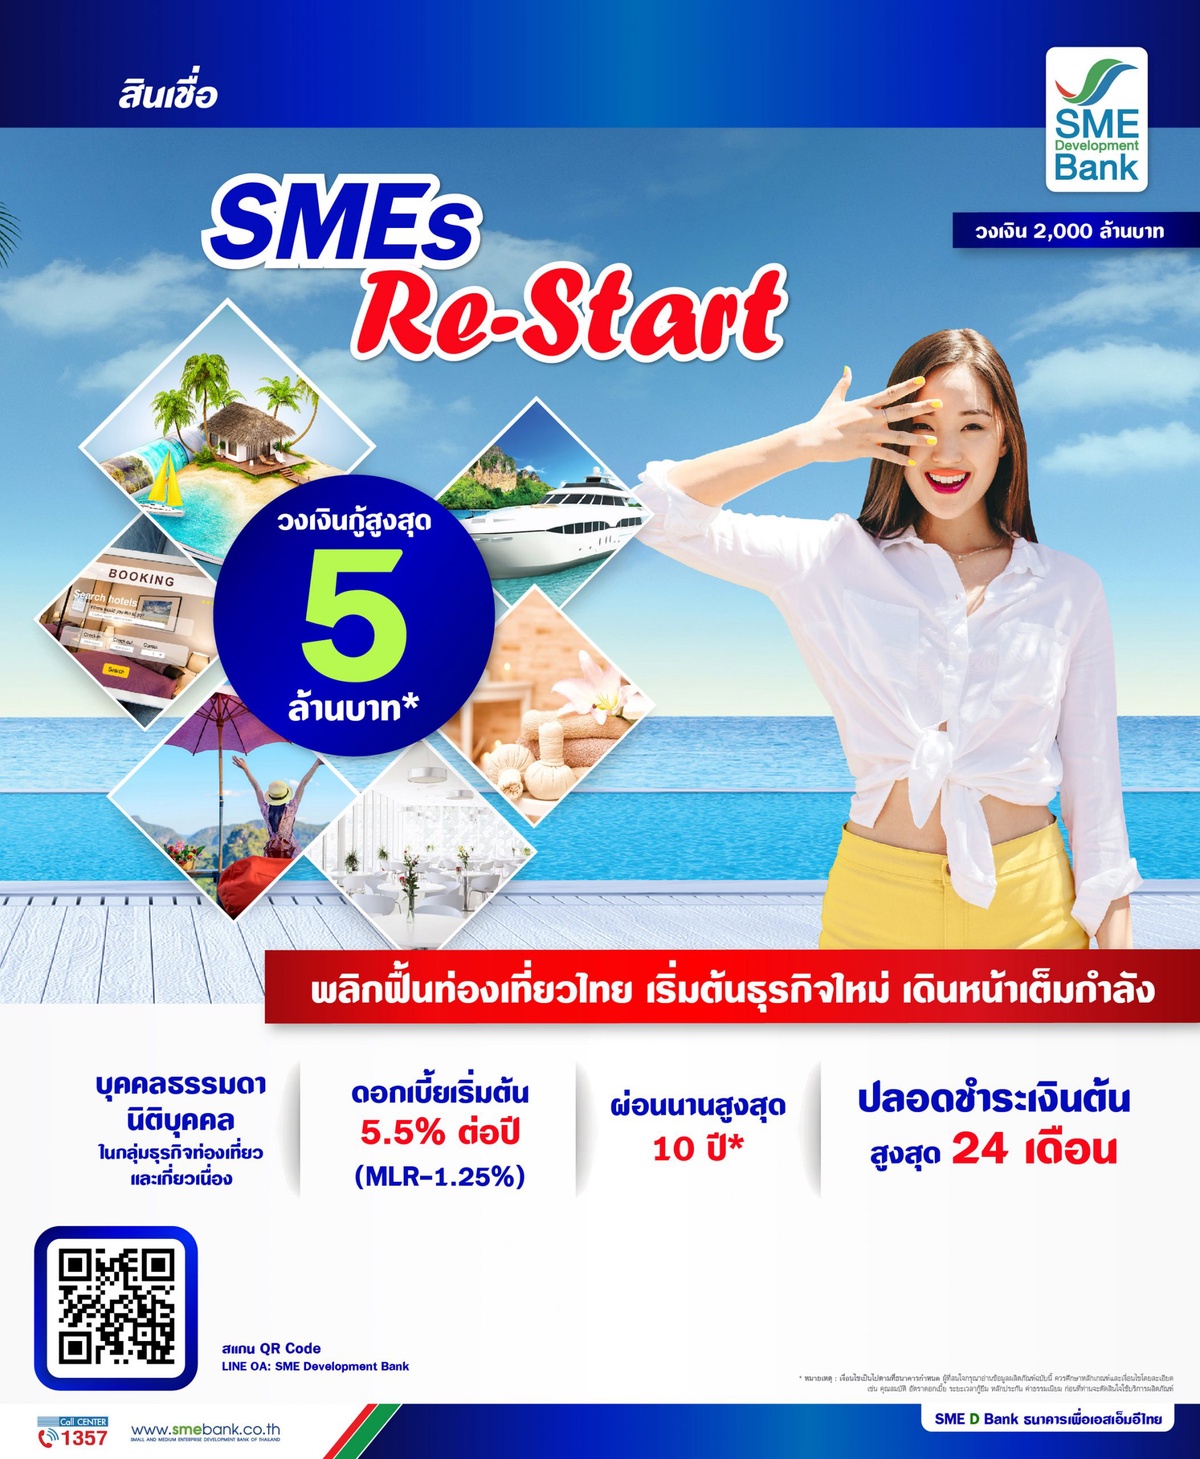 SME D Bank ปลุกเอสเอ็มอีท่องเที่ยวและเกี่ยวเนื่องติดเครื่องธุรกิจ ผุด 'สินเชื่อ SMEs Re-Start' คู่โปรแกรมช่วยพัฒนา